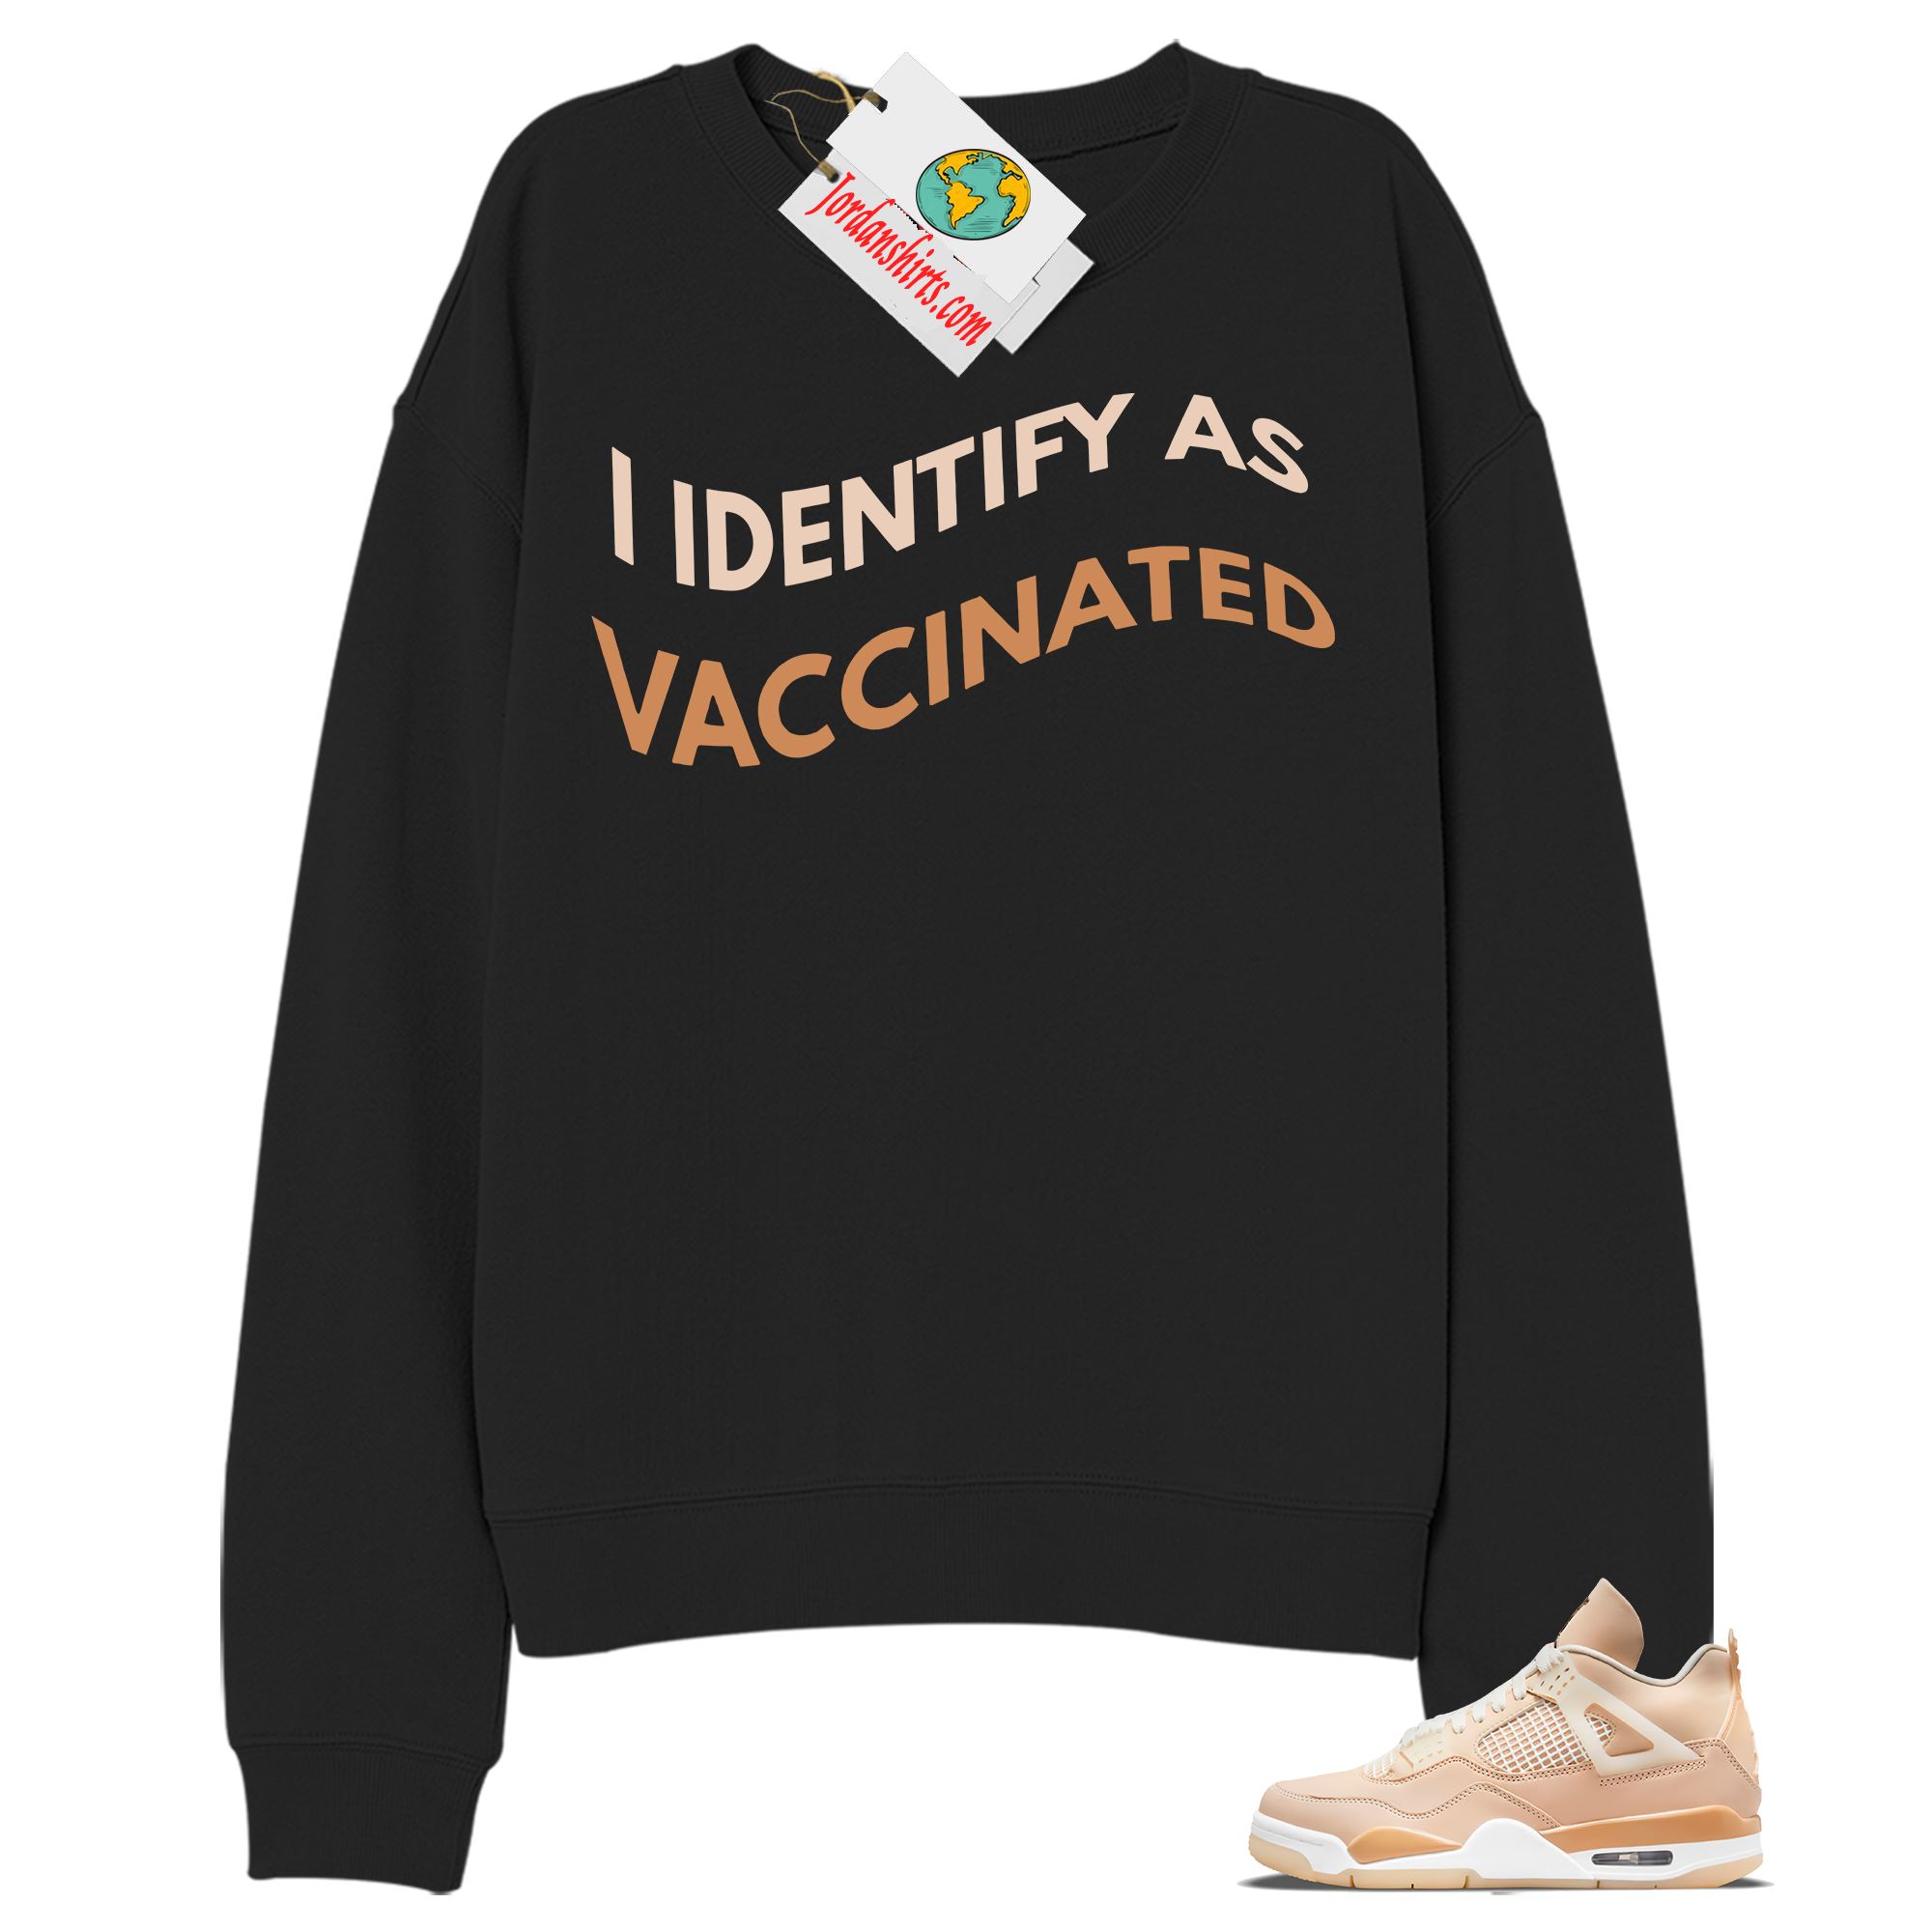 Jordan 4 Sweatshirt, I Identify As Vaccinated Black Sweatshirt Air Jordan 4 Shimmer 4s Plus Size Up To 5xl